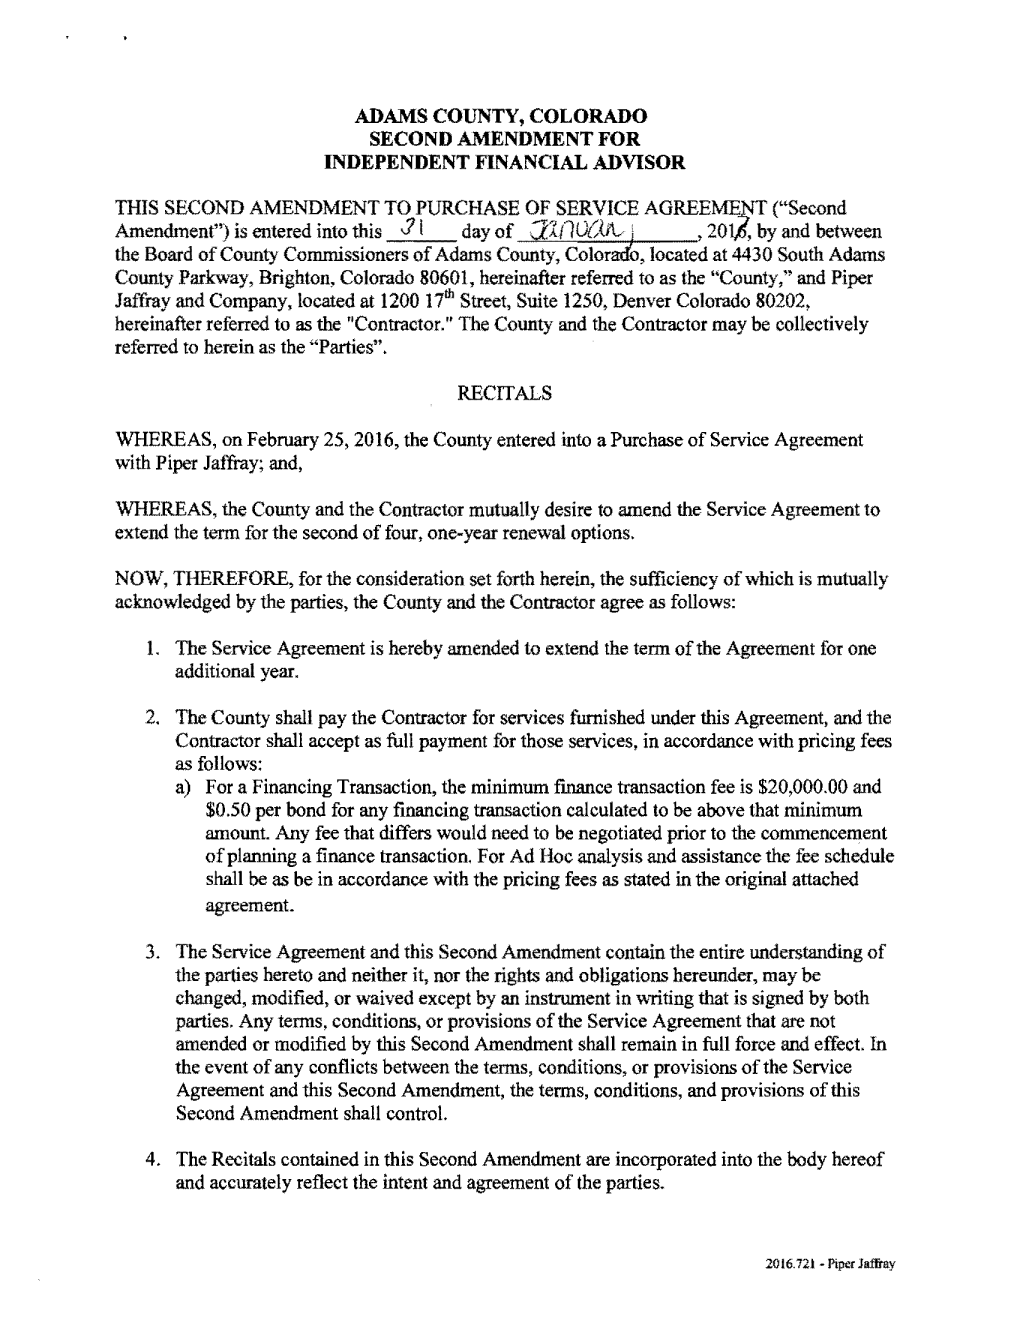 Adams County, Colorado Second Amendment for Independent Financial Advisor